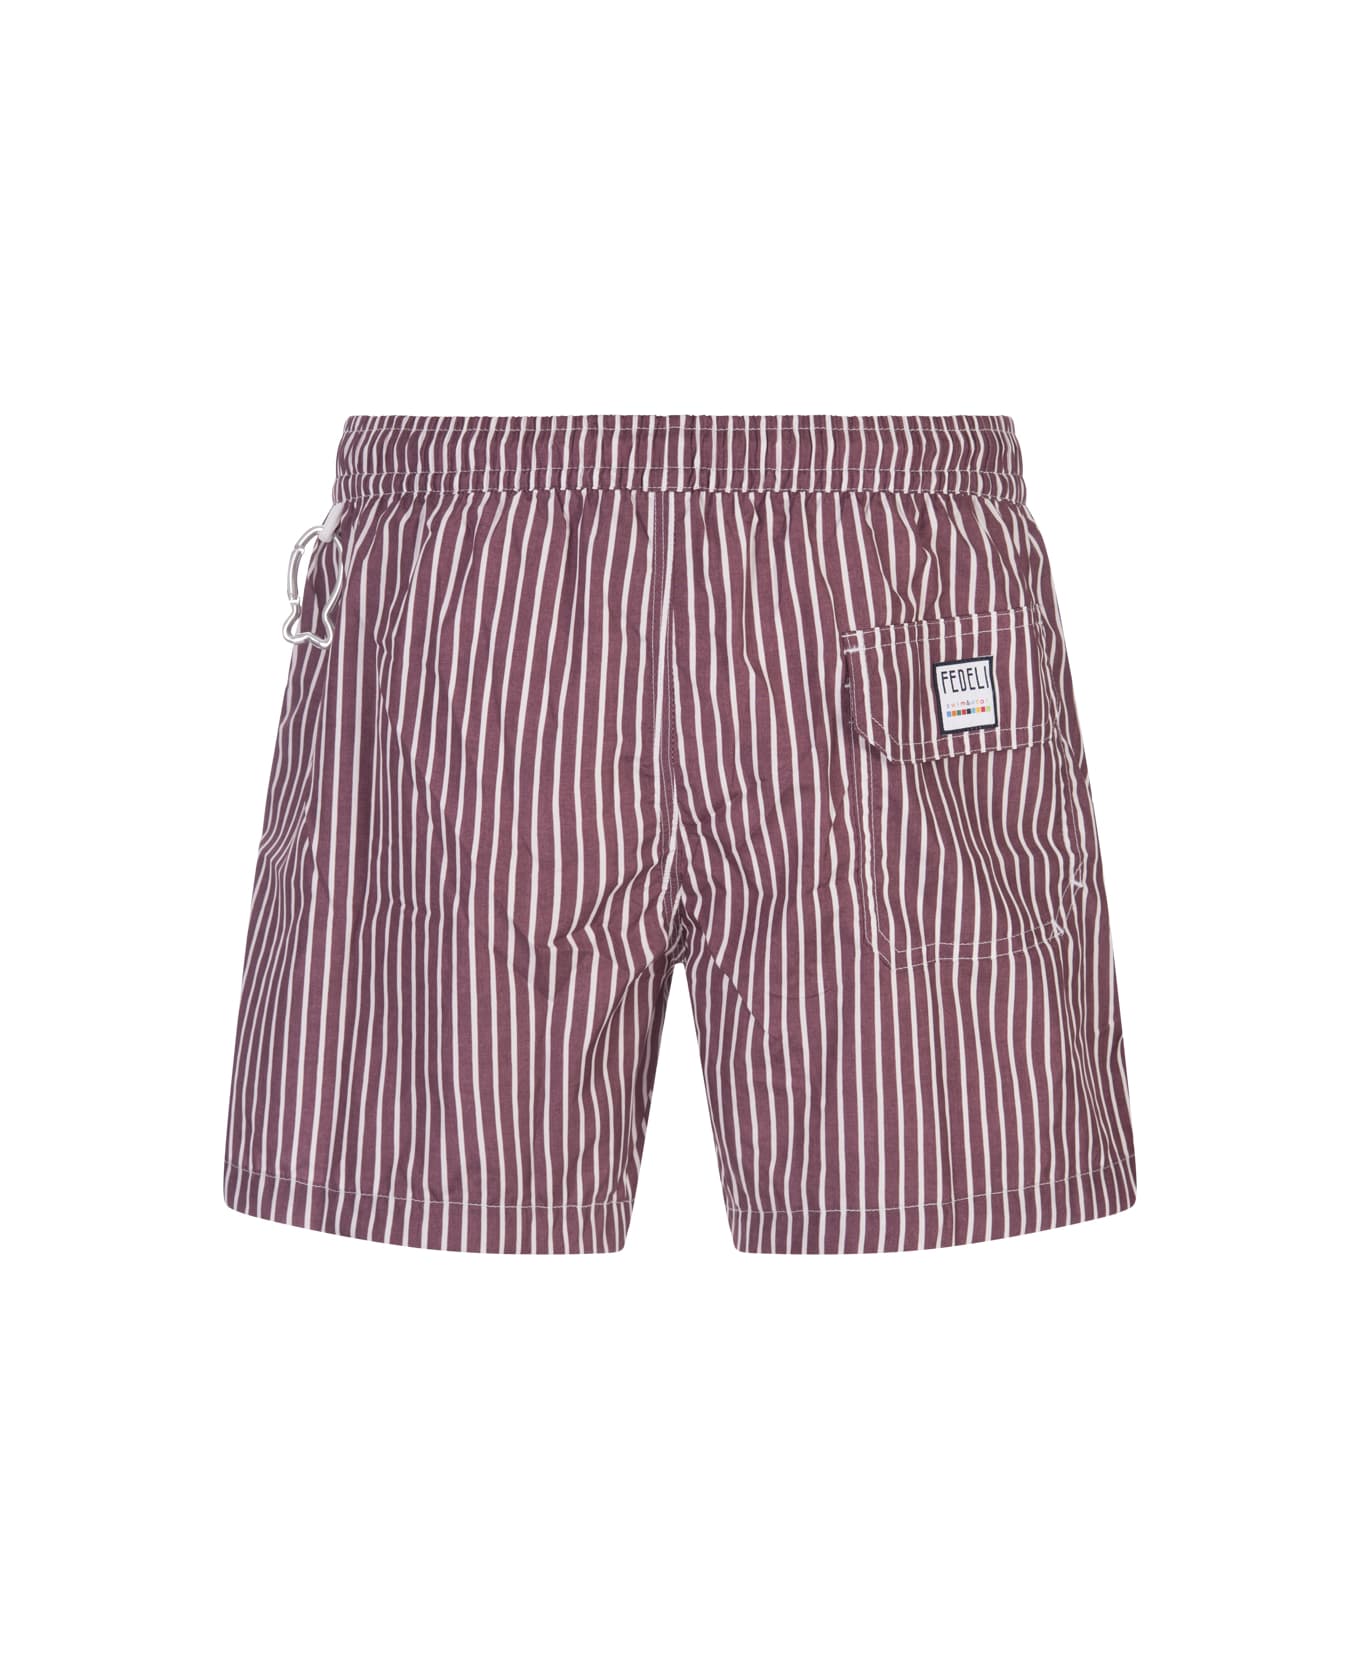 Fedeli Burgundy And White Striped Swim Shorts - Red スイムトランクス